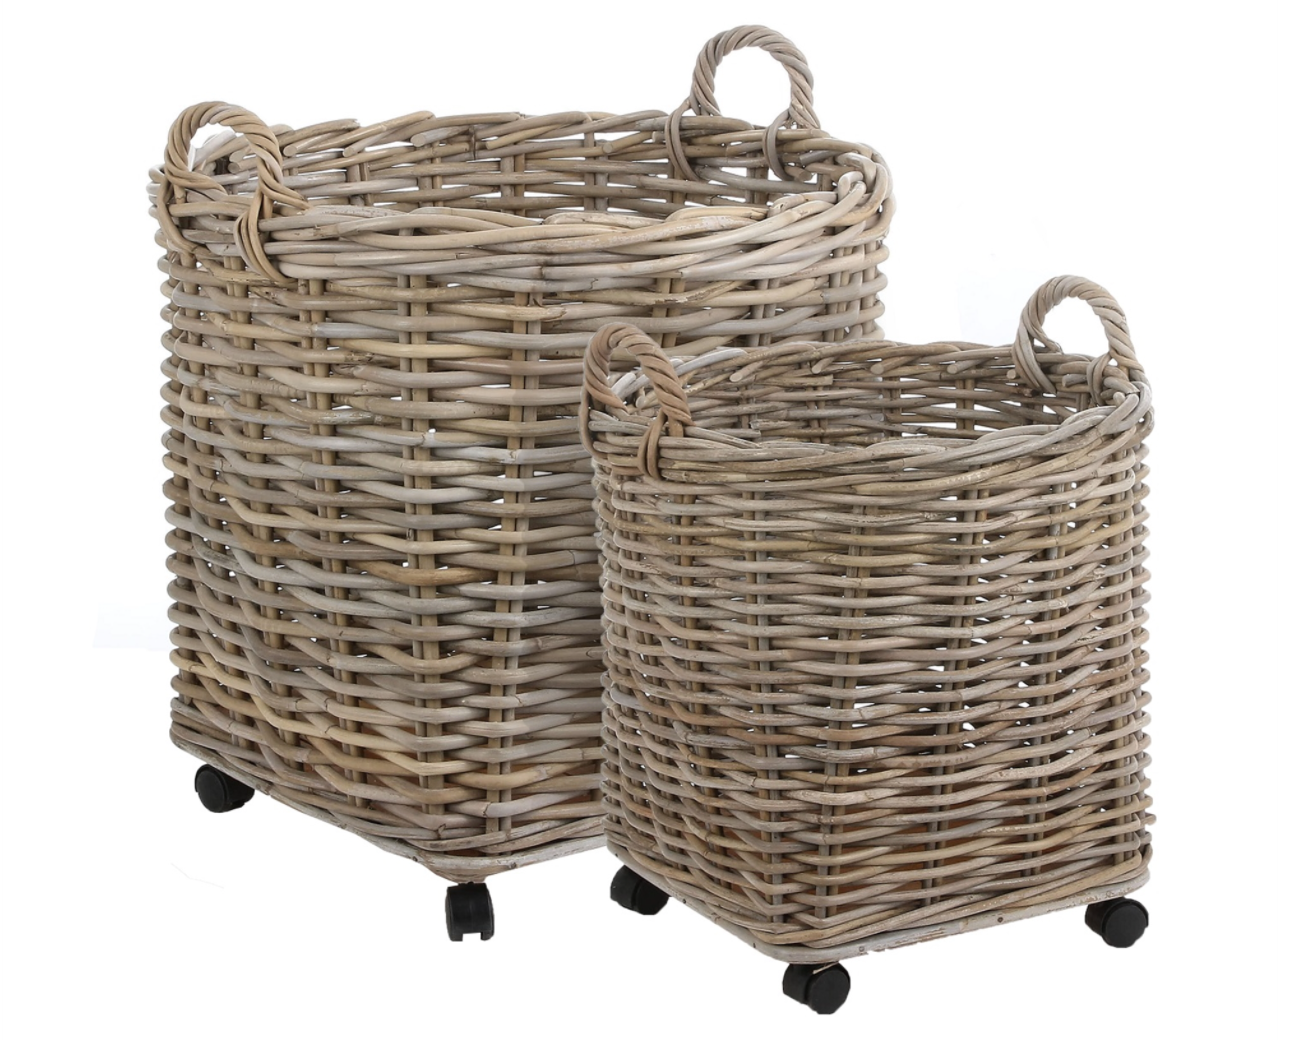 Rattan Basket on Wheels